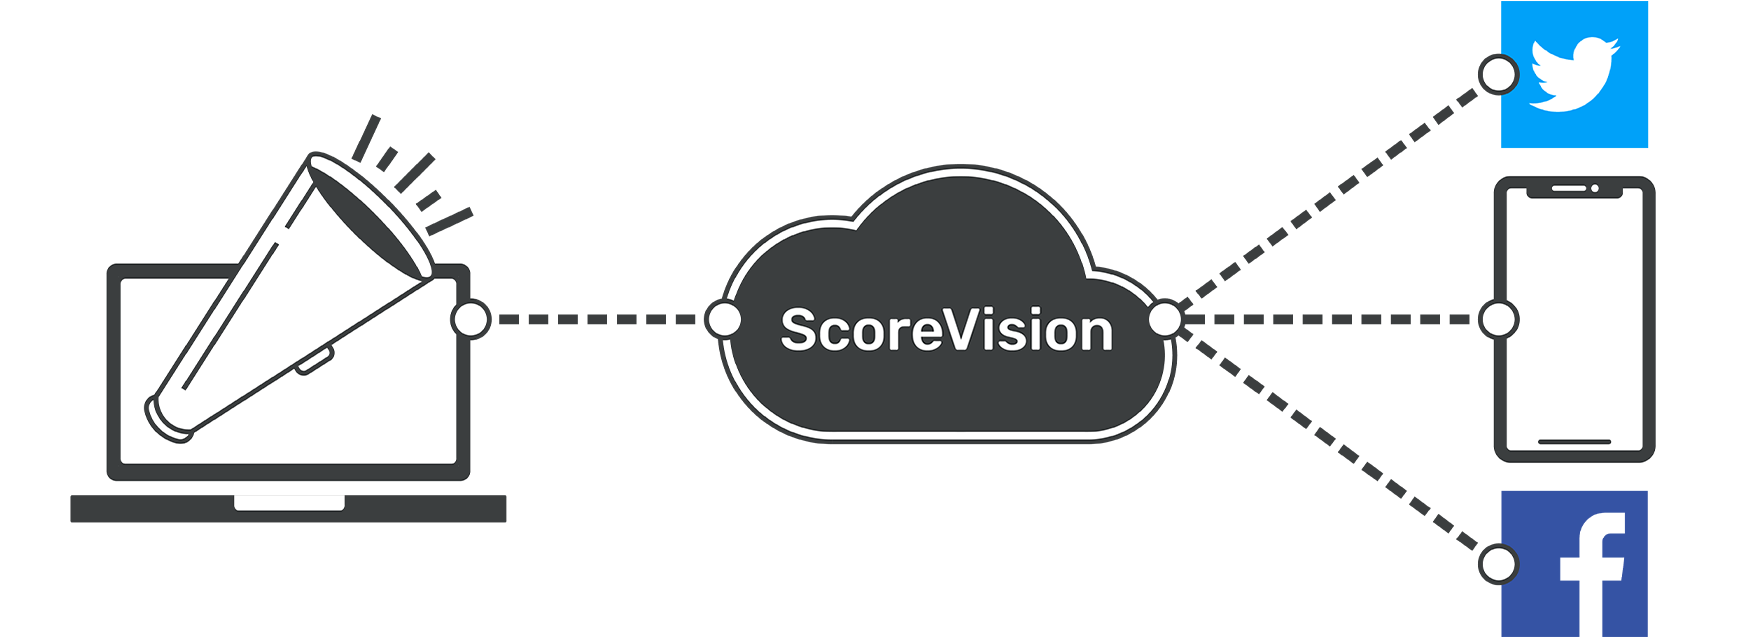 ScoreVision Announcements - How it Works